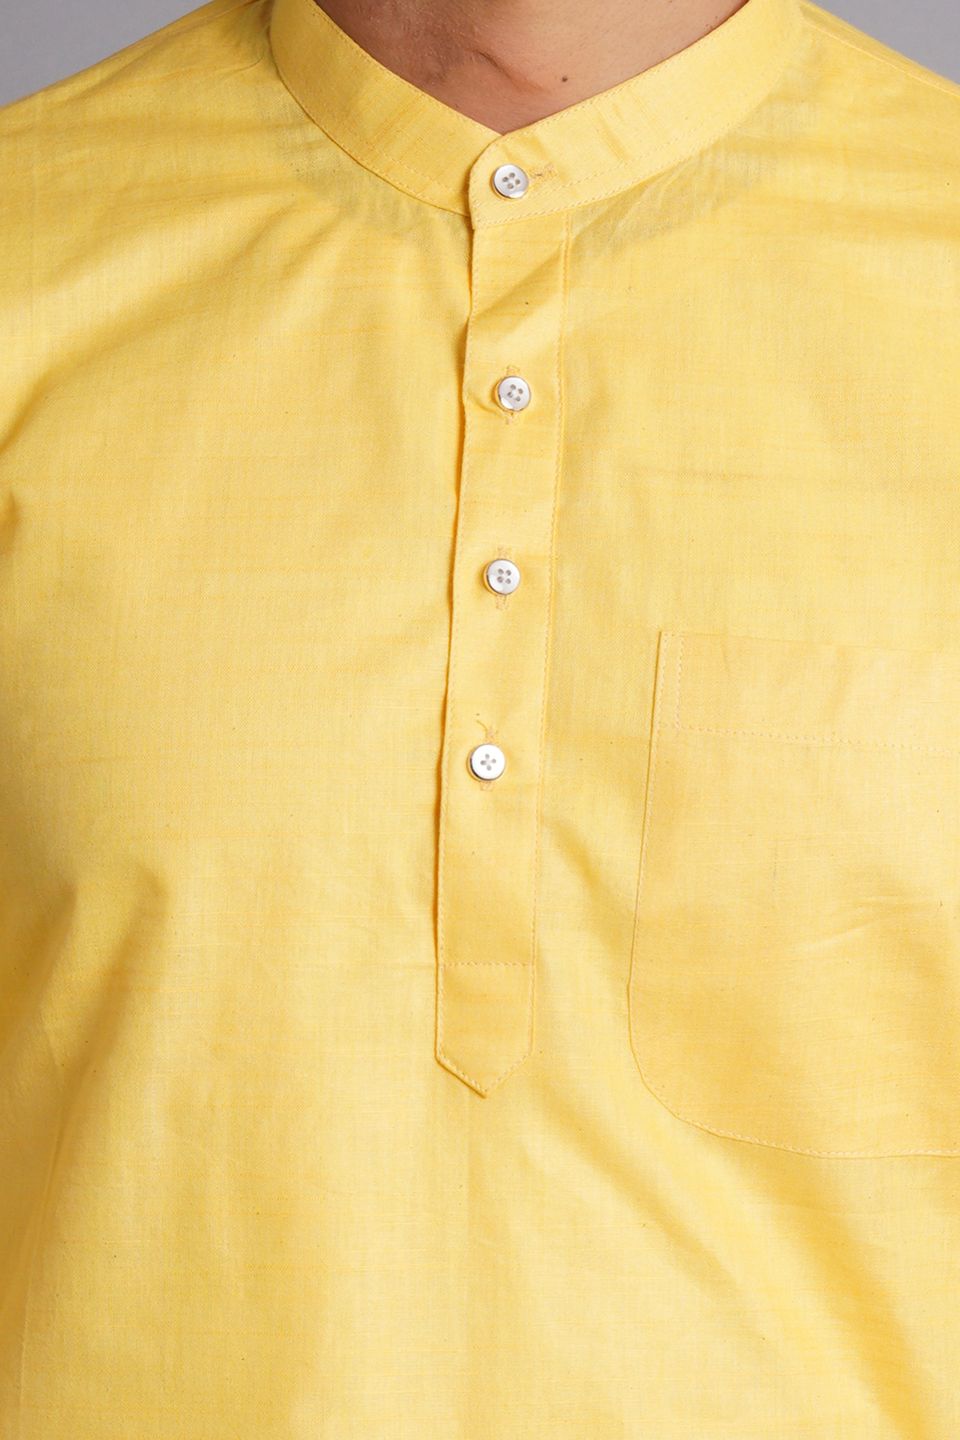 Matka Silk Yellow Solid Kurta Pajama